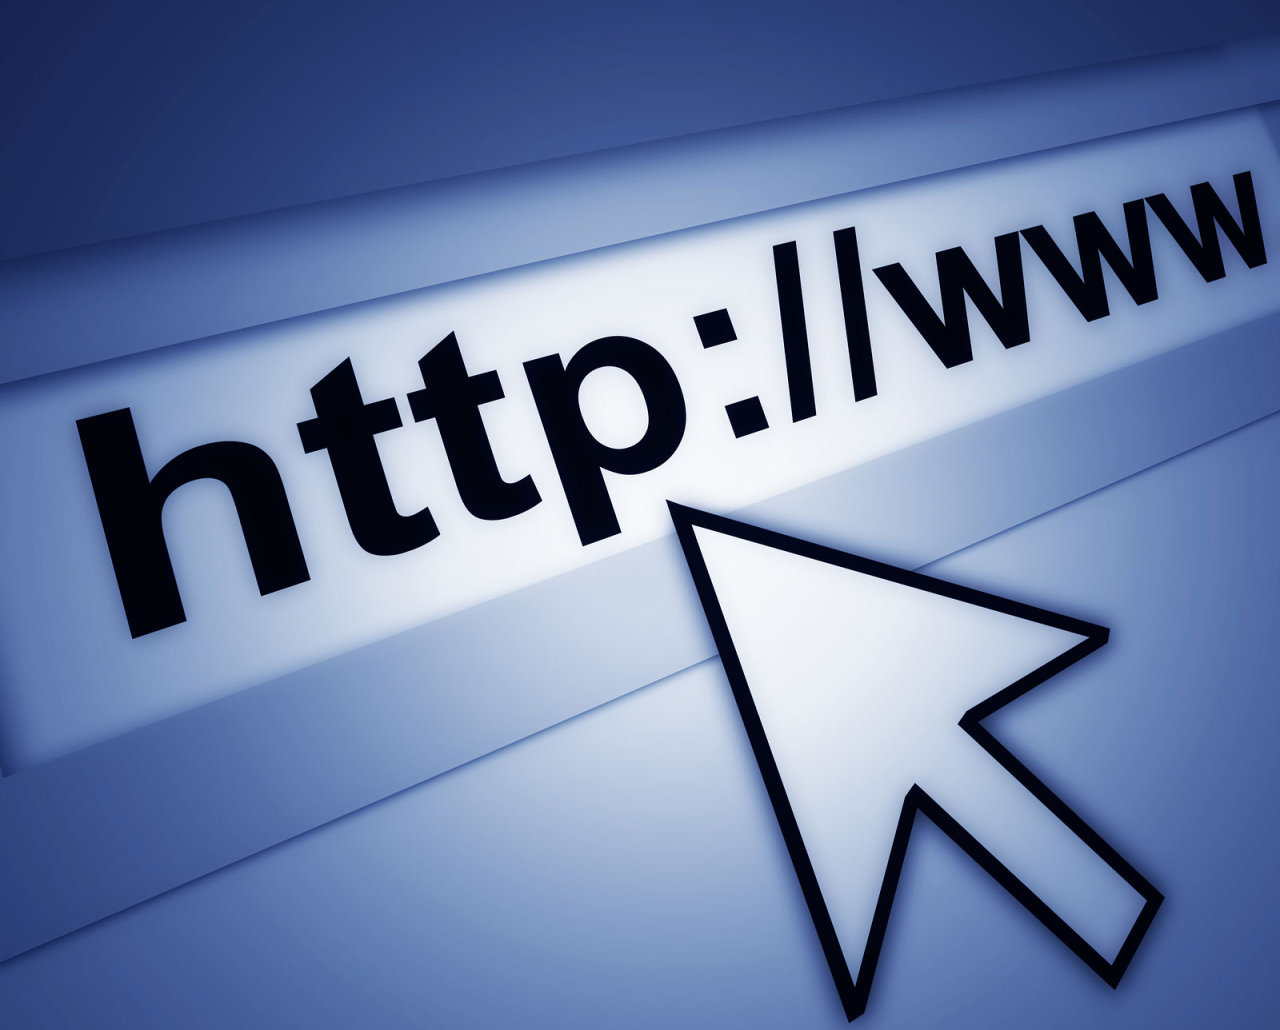 Over 90% Georgian enterprises gain access to Internet